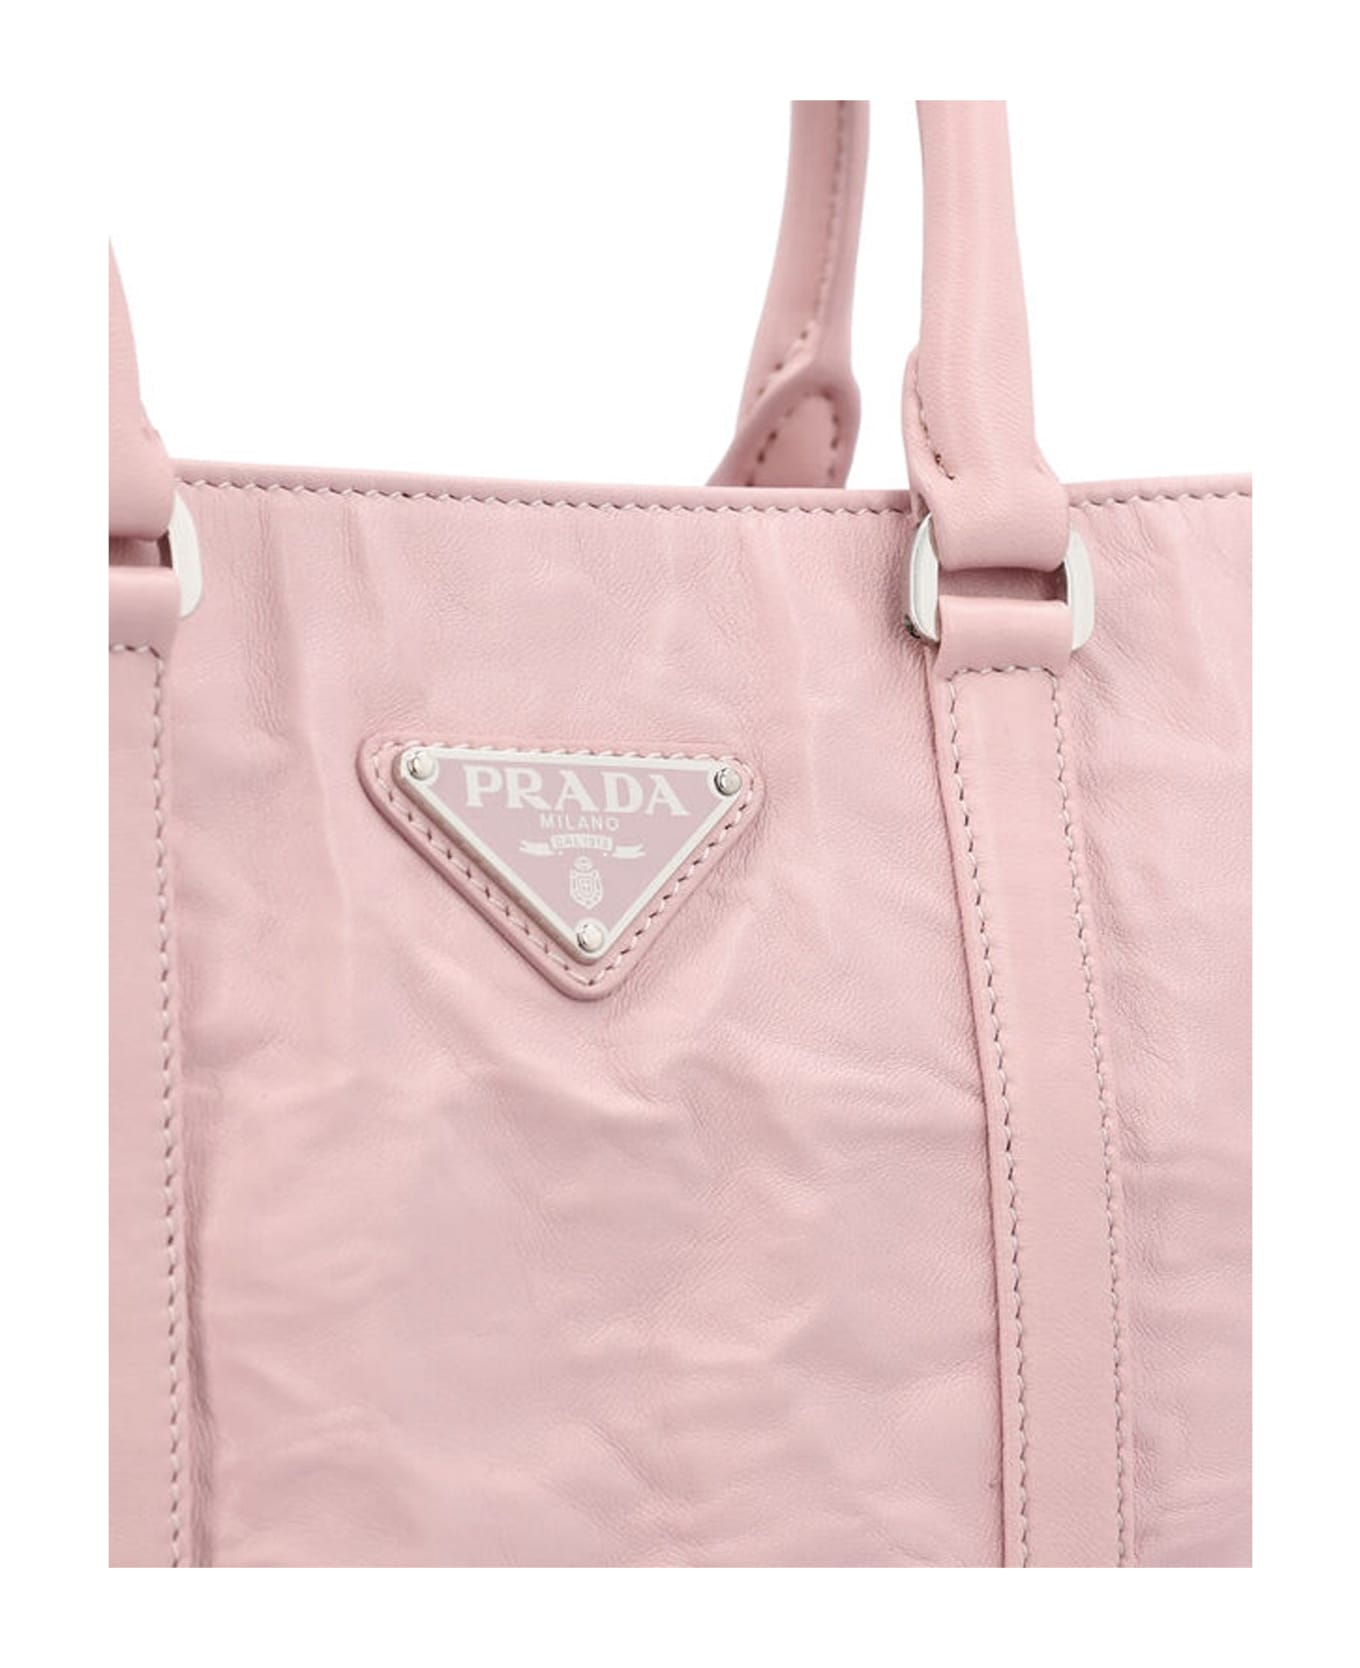 Prada Leather Handbag - Pink